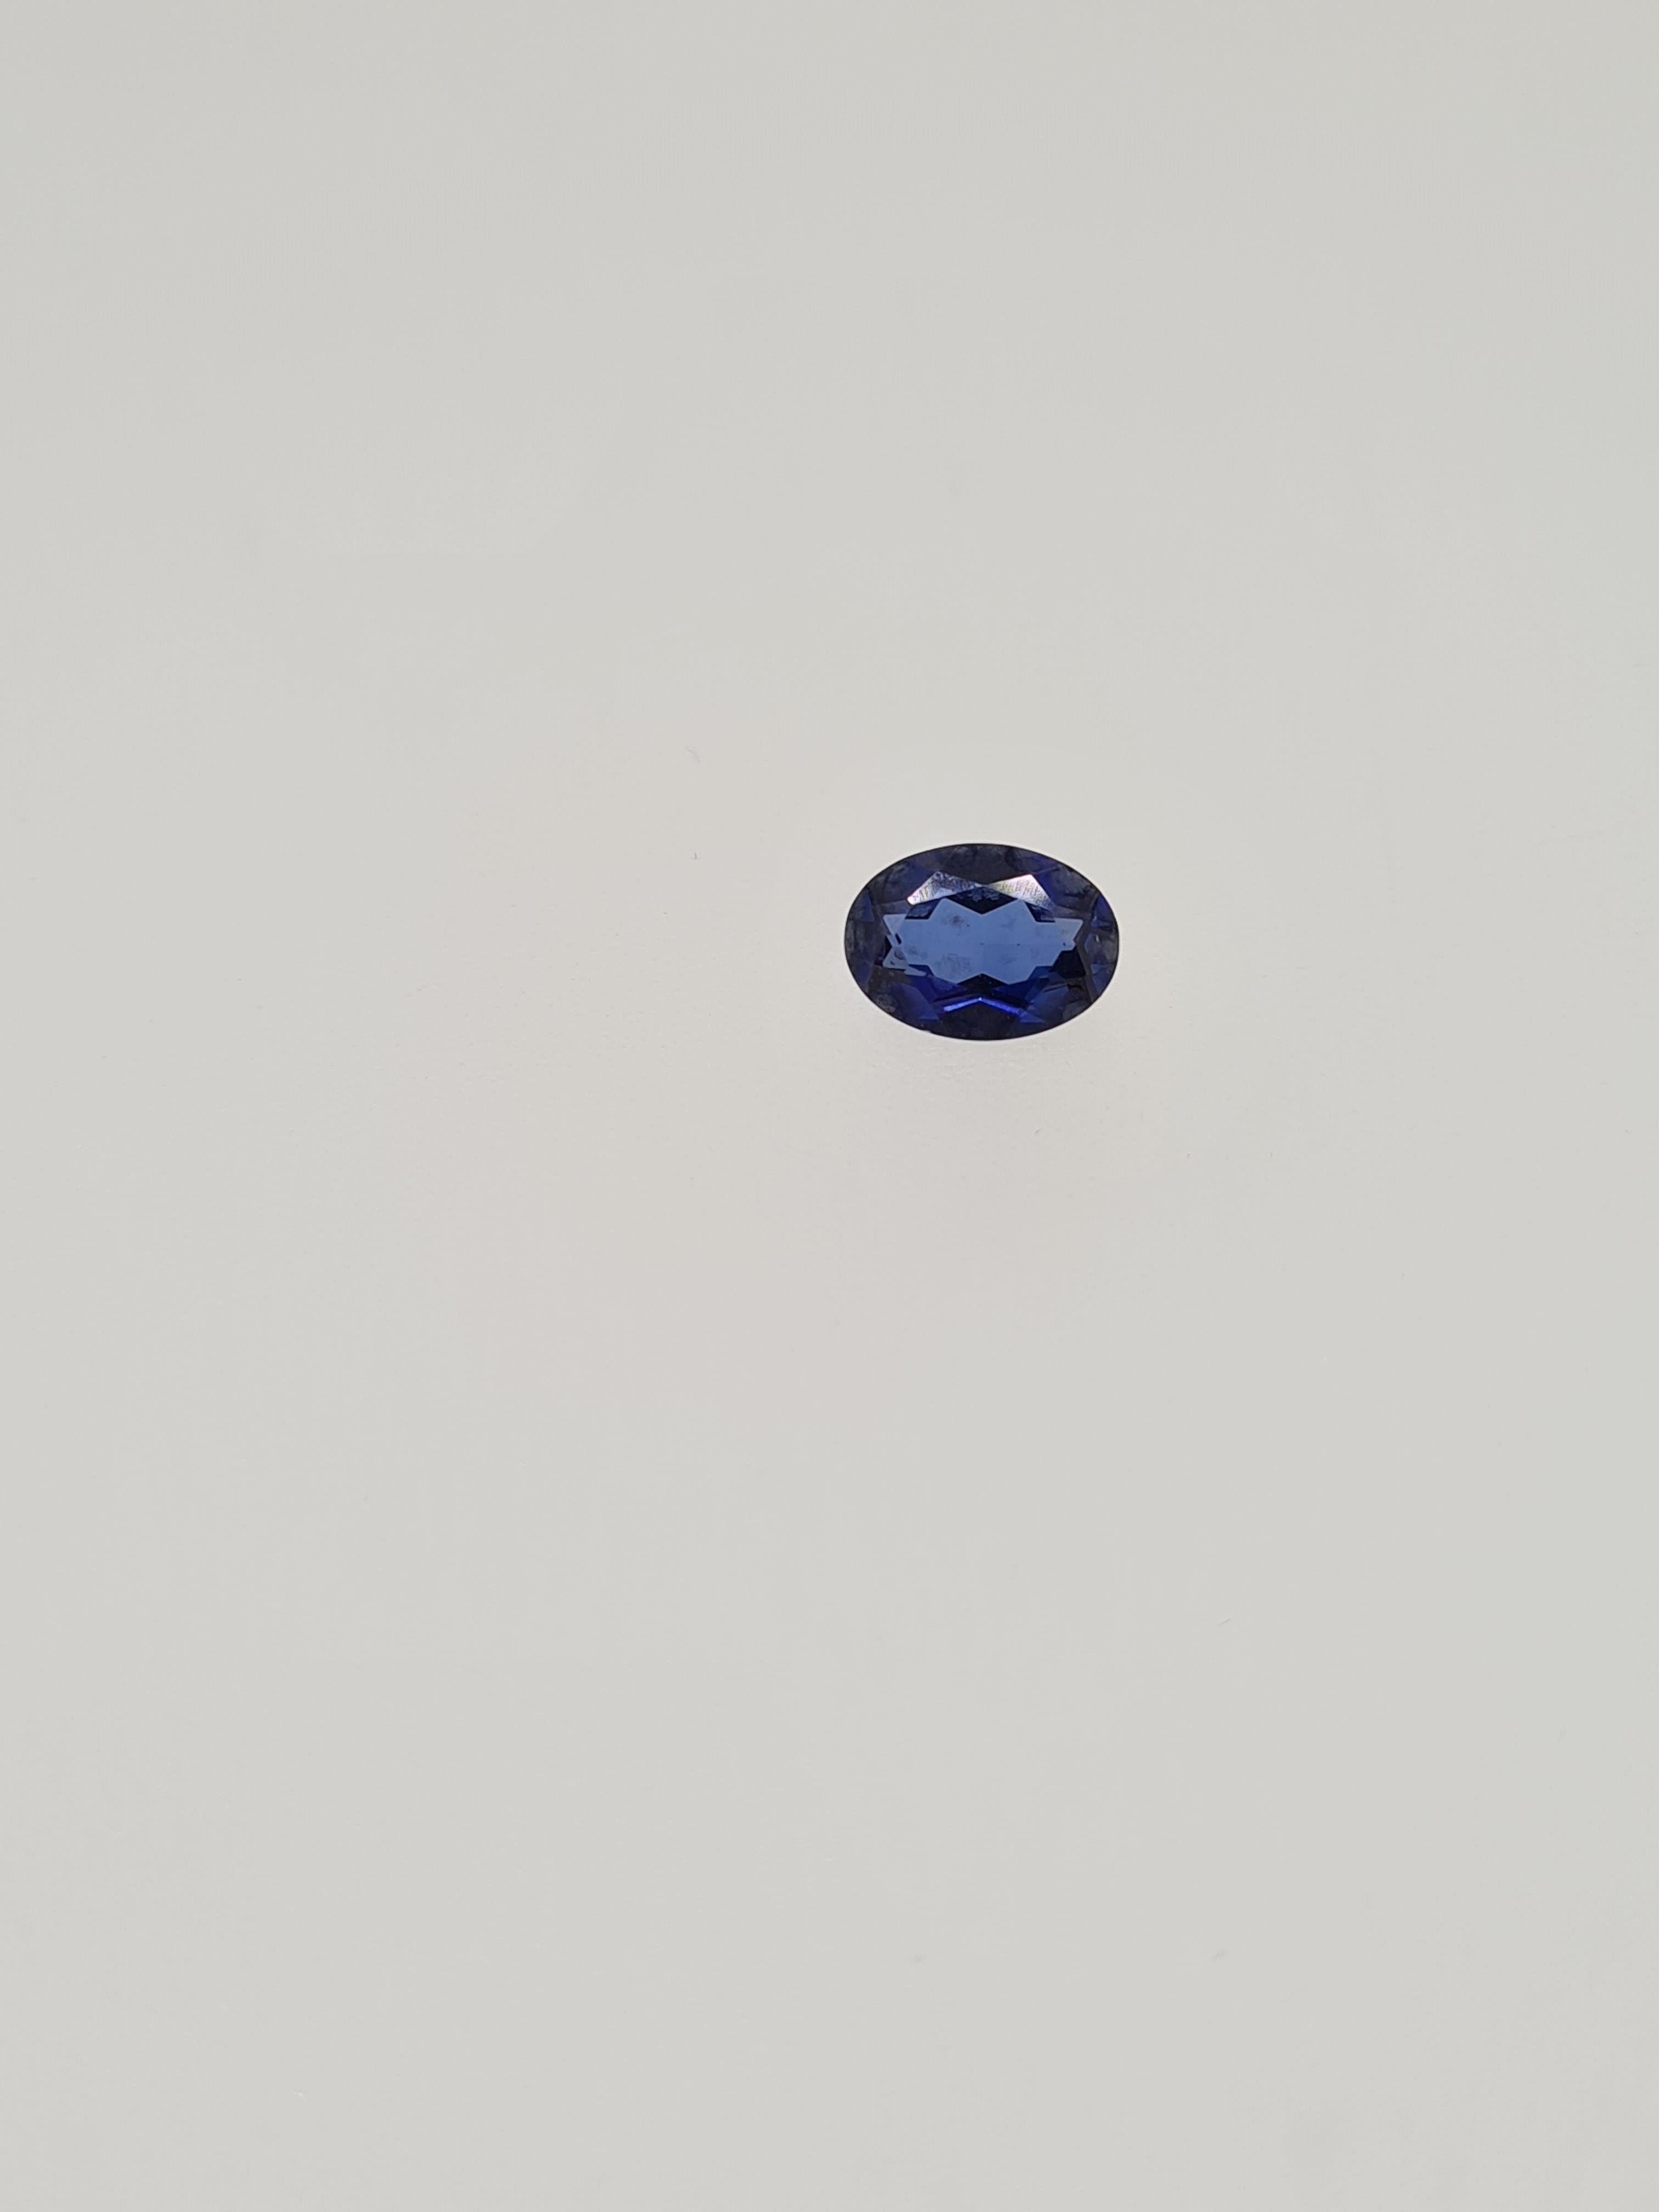 Sapphire oval cut gem stone - Image 4 of 5